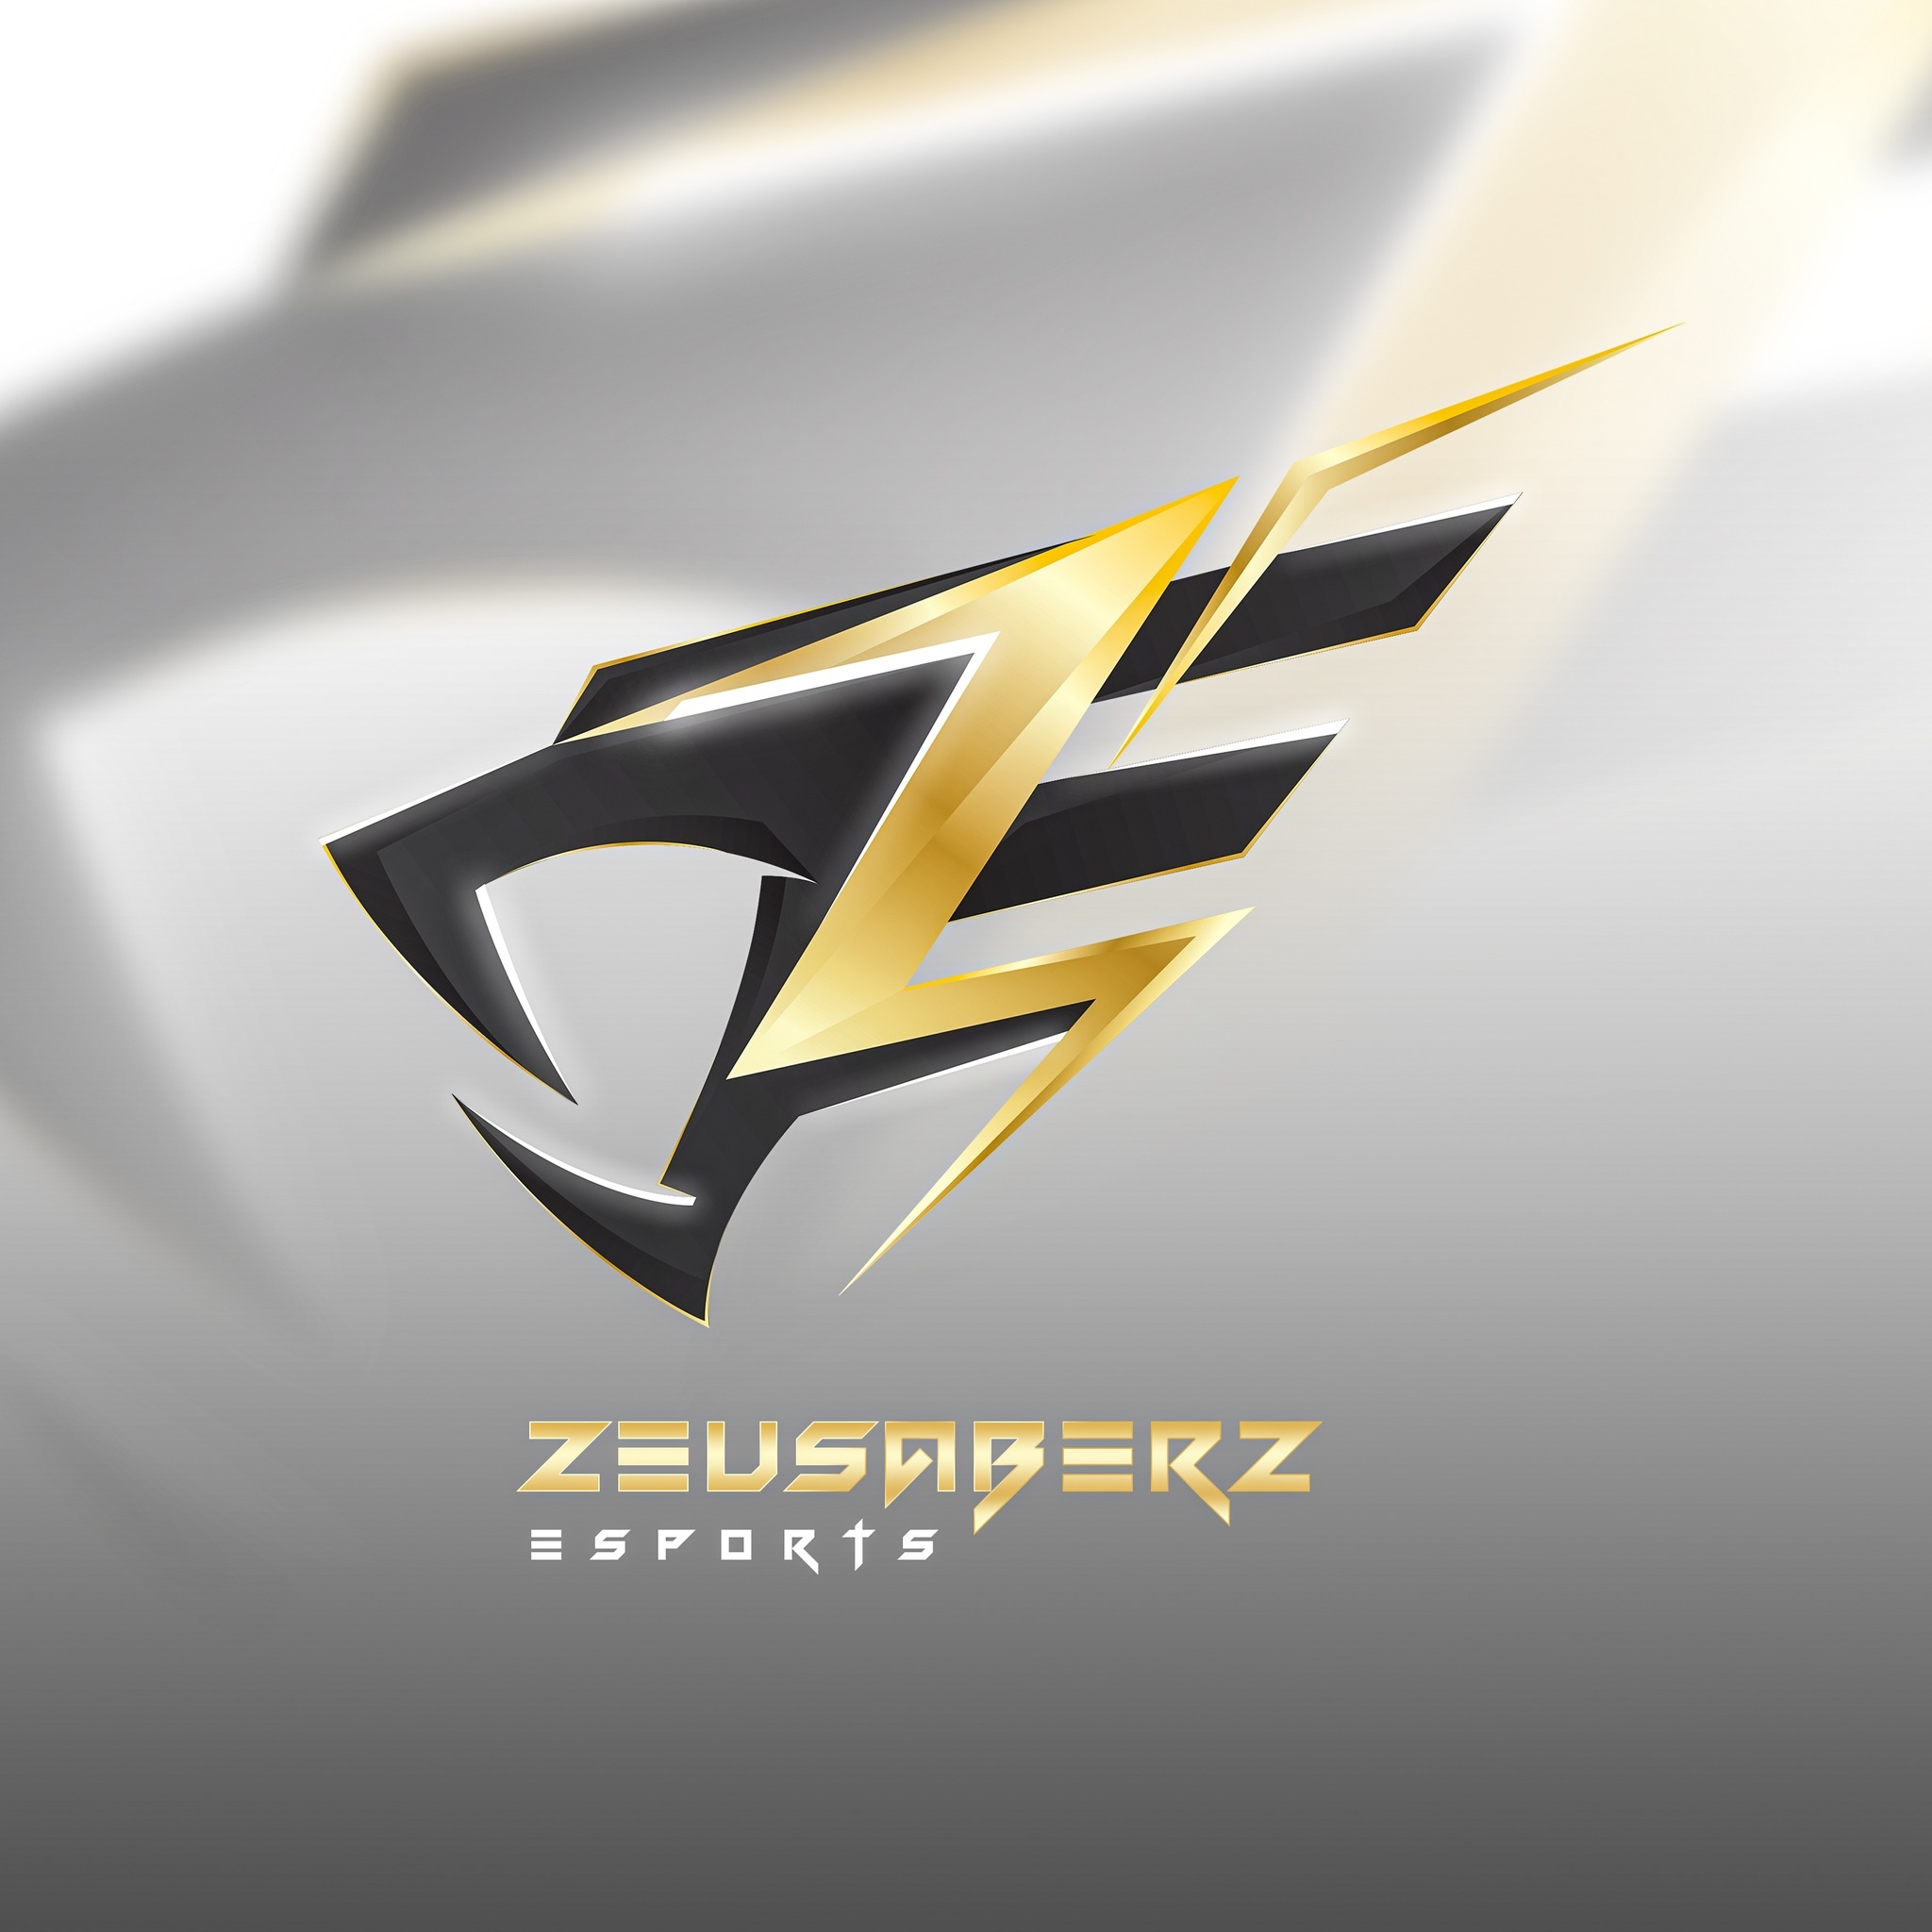 ZeusaberZ Esports